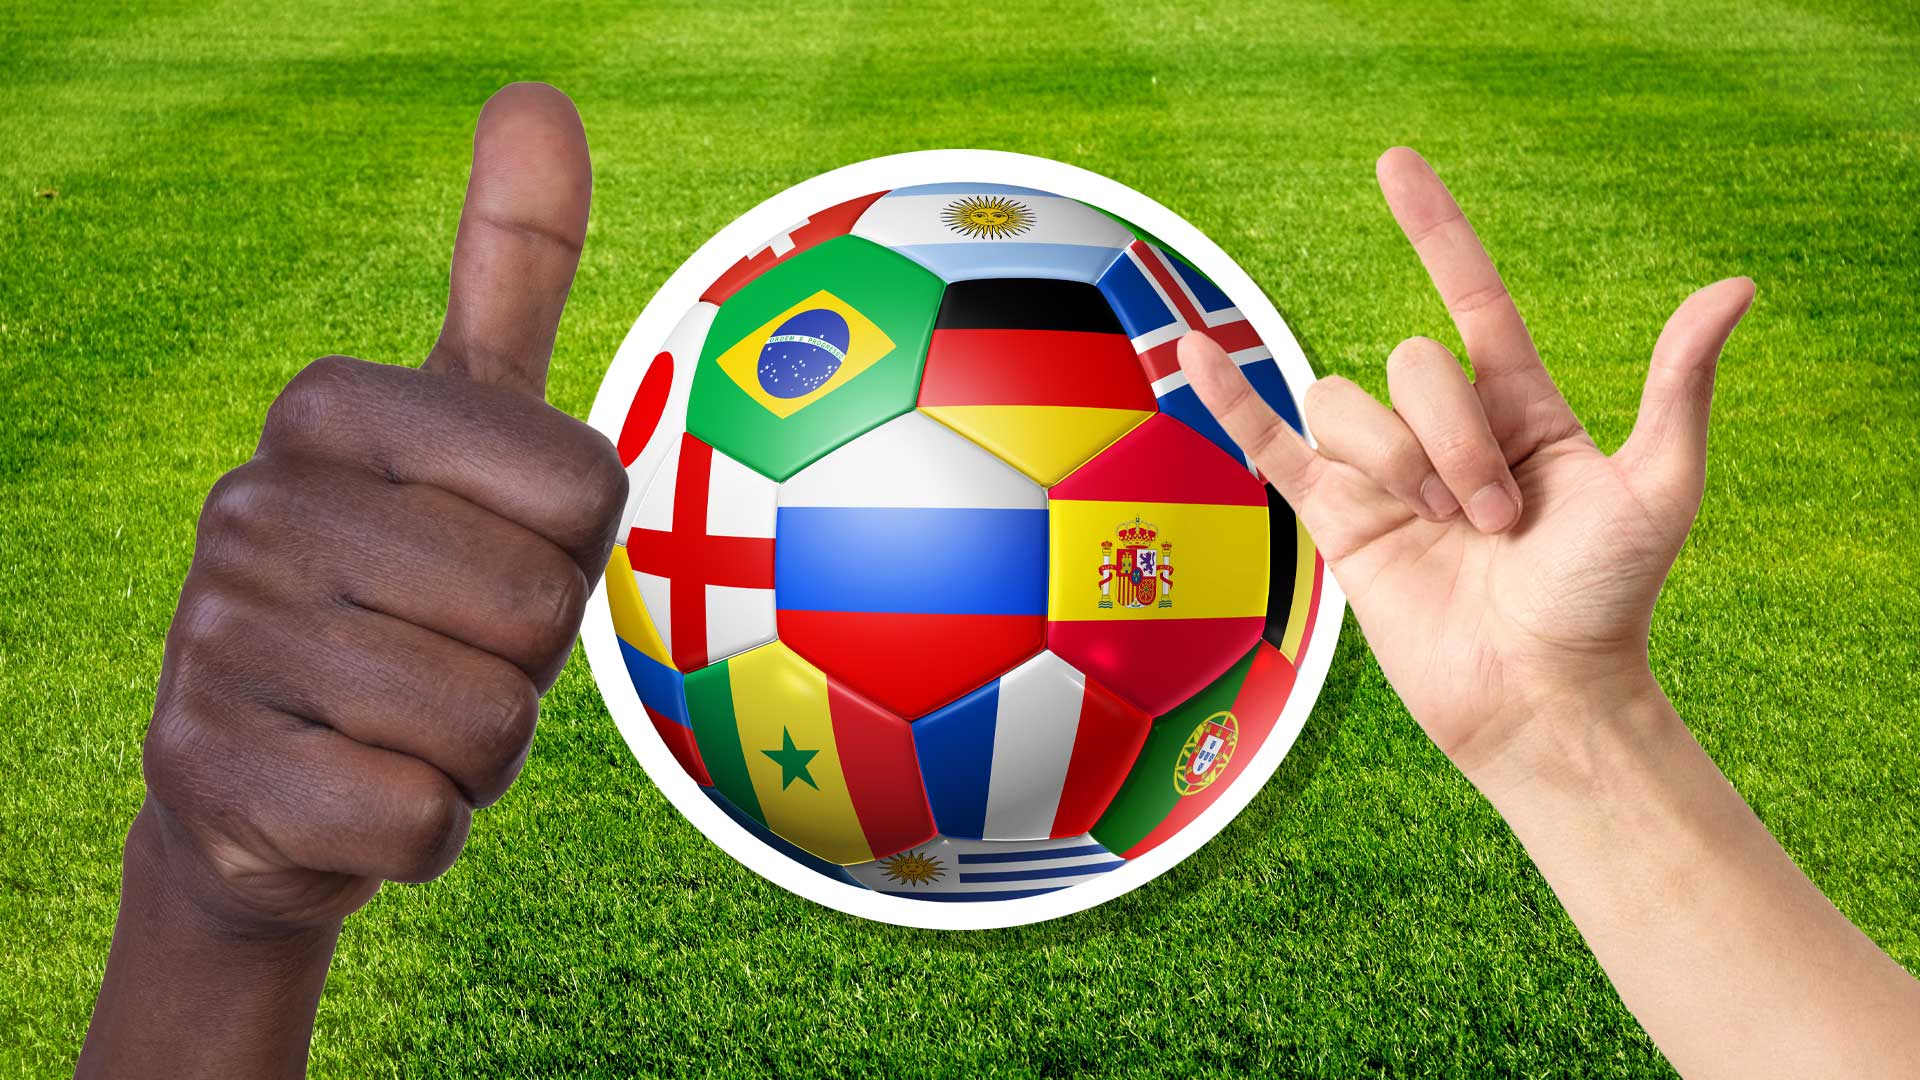 A World Cup themed football